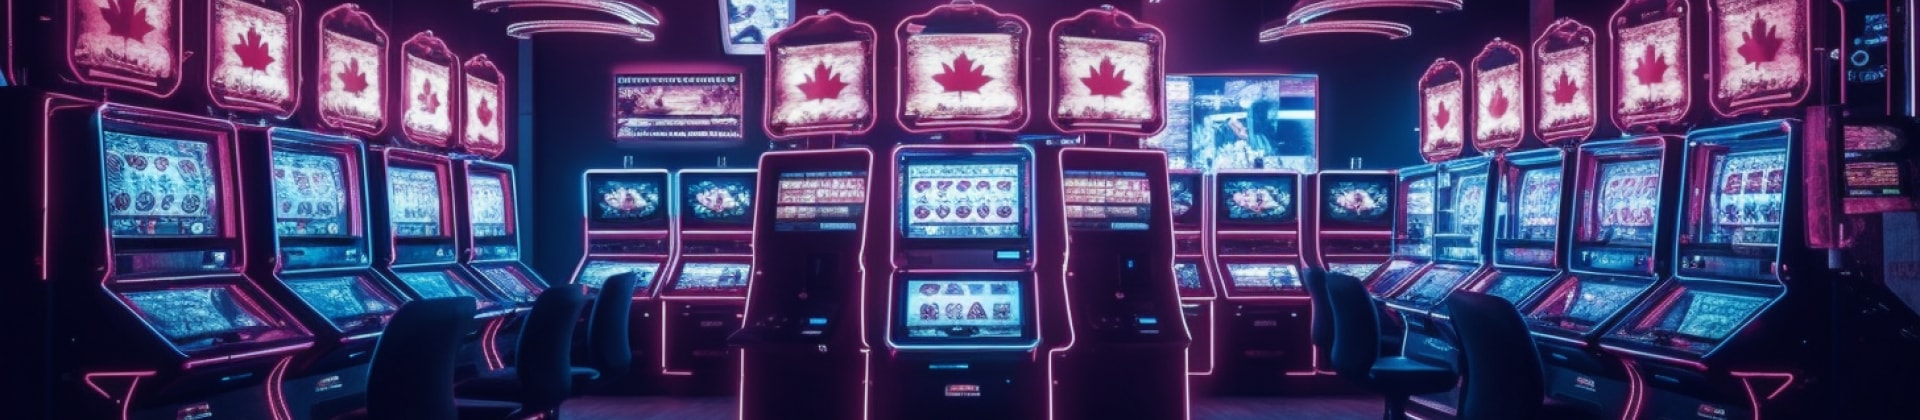 Licences des casinos btc canadiens